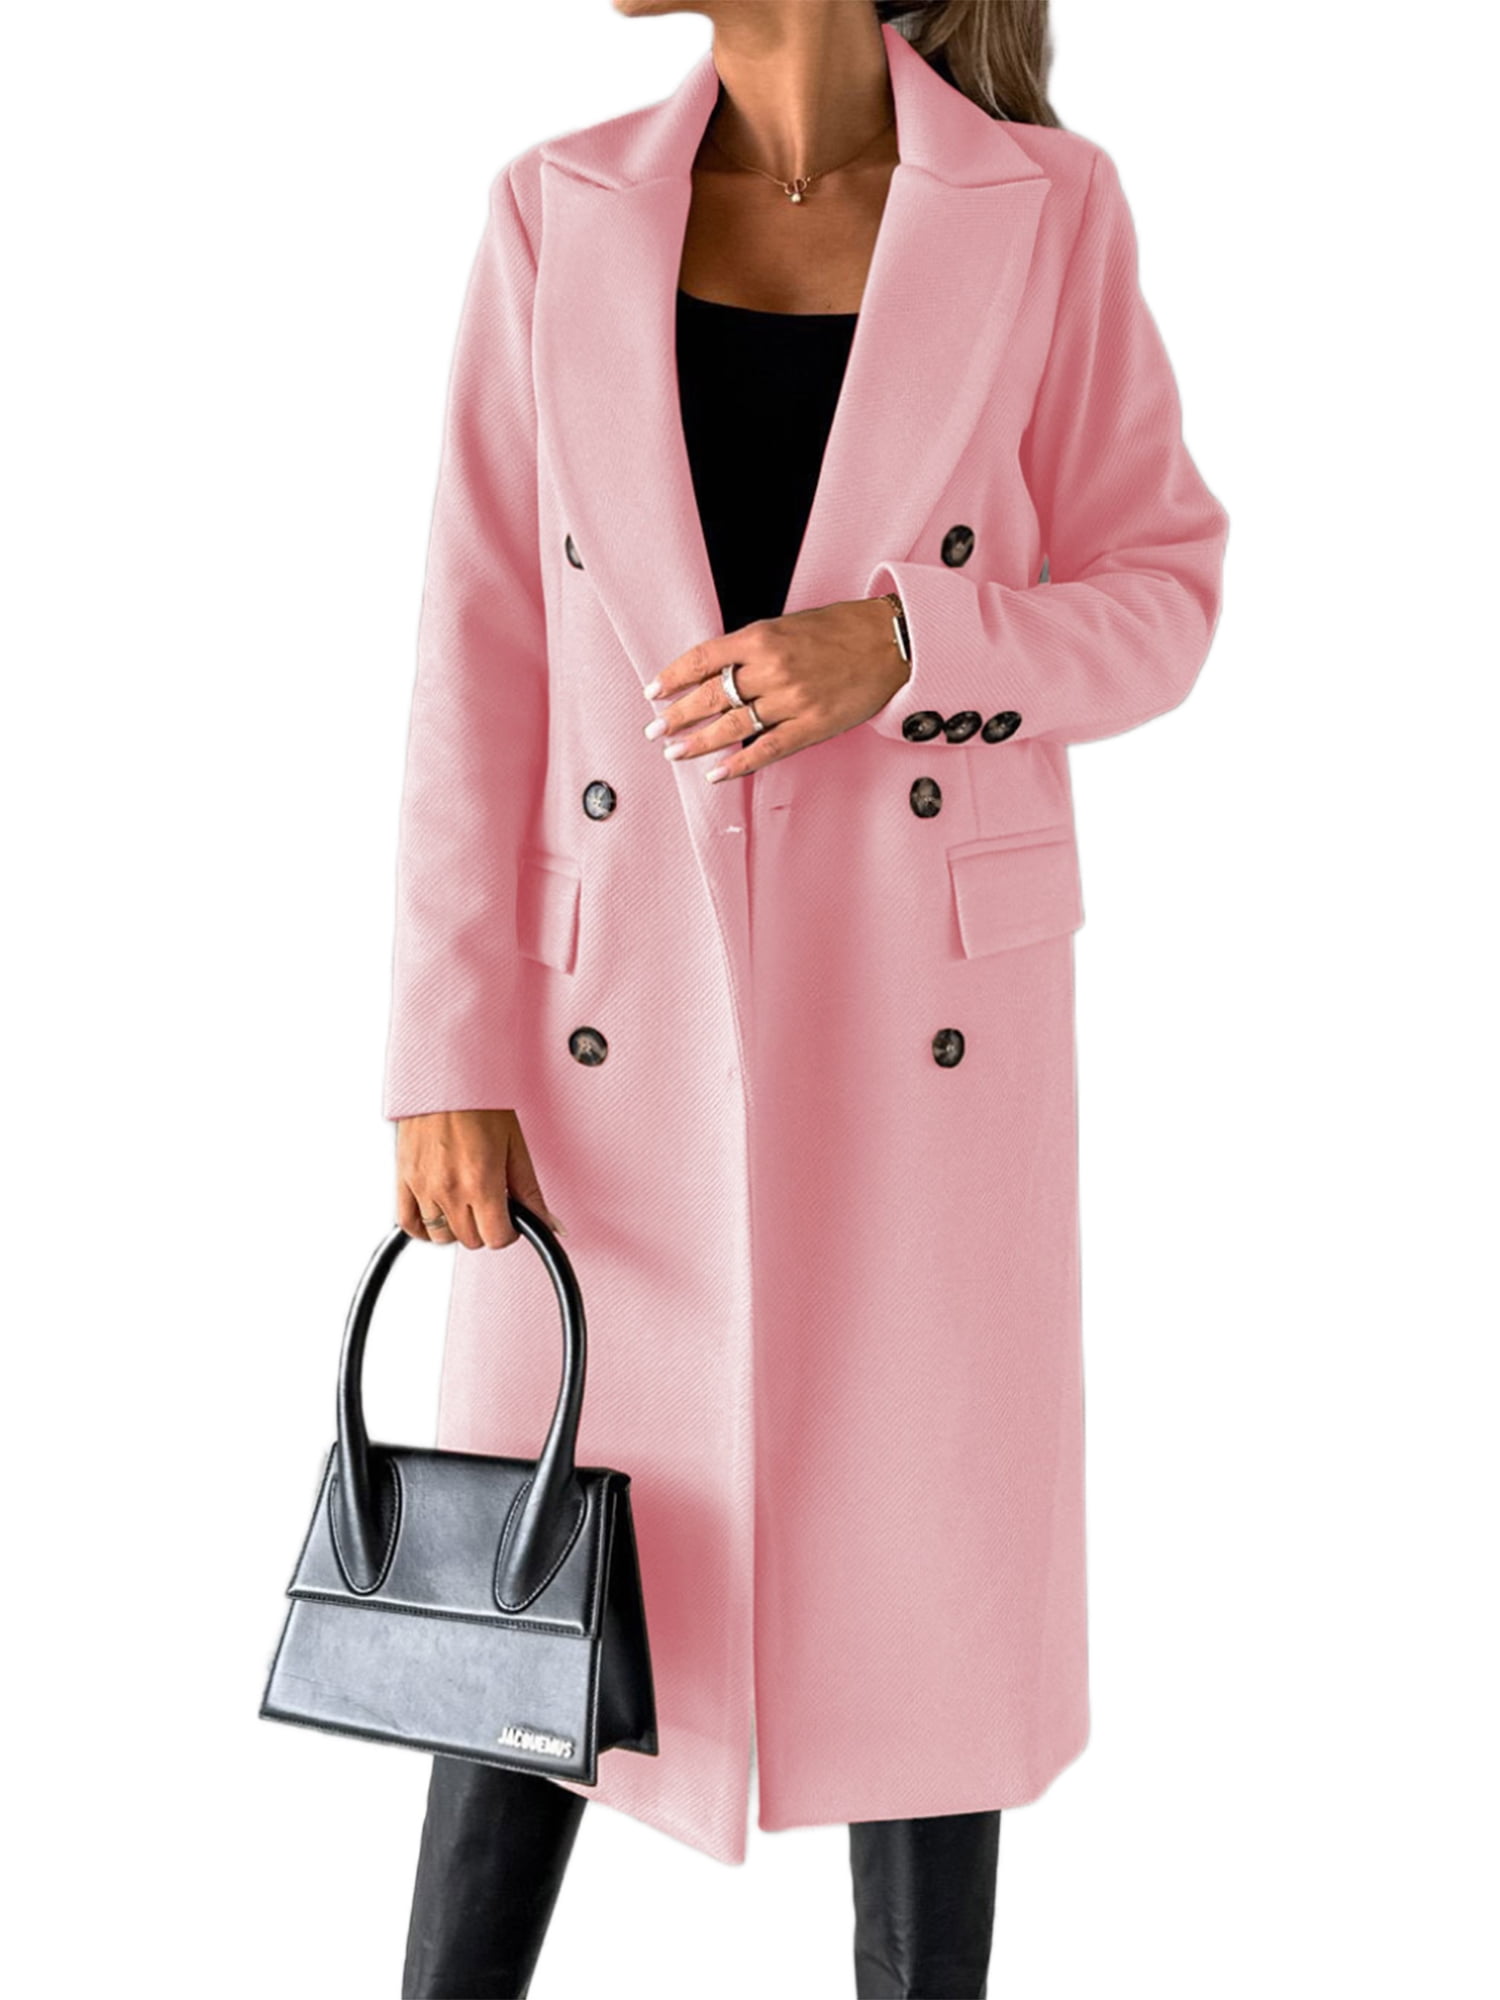 Capreze Double-breasted Coat Solid Color Outwear Lfor Women V Neck Jacket  Autumn Woolen Overcoats Pink L 